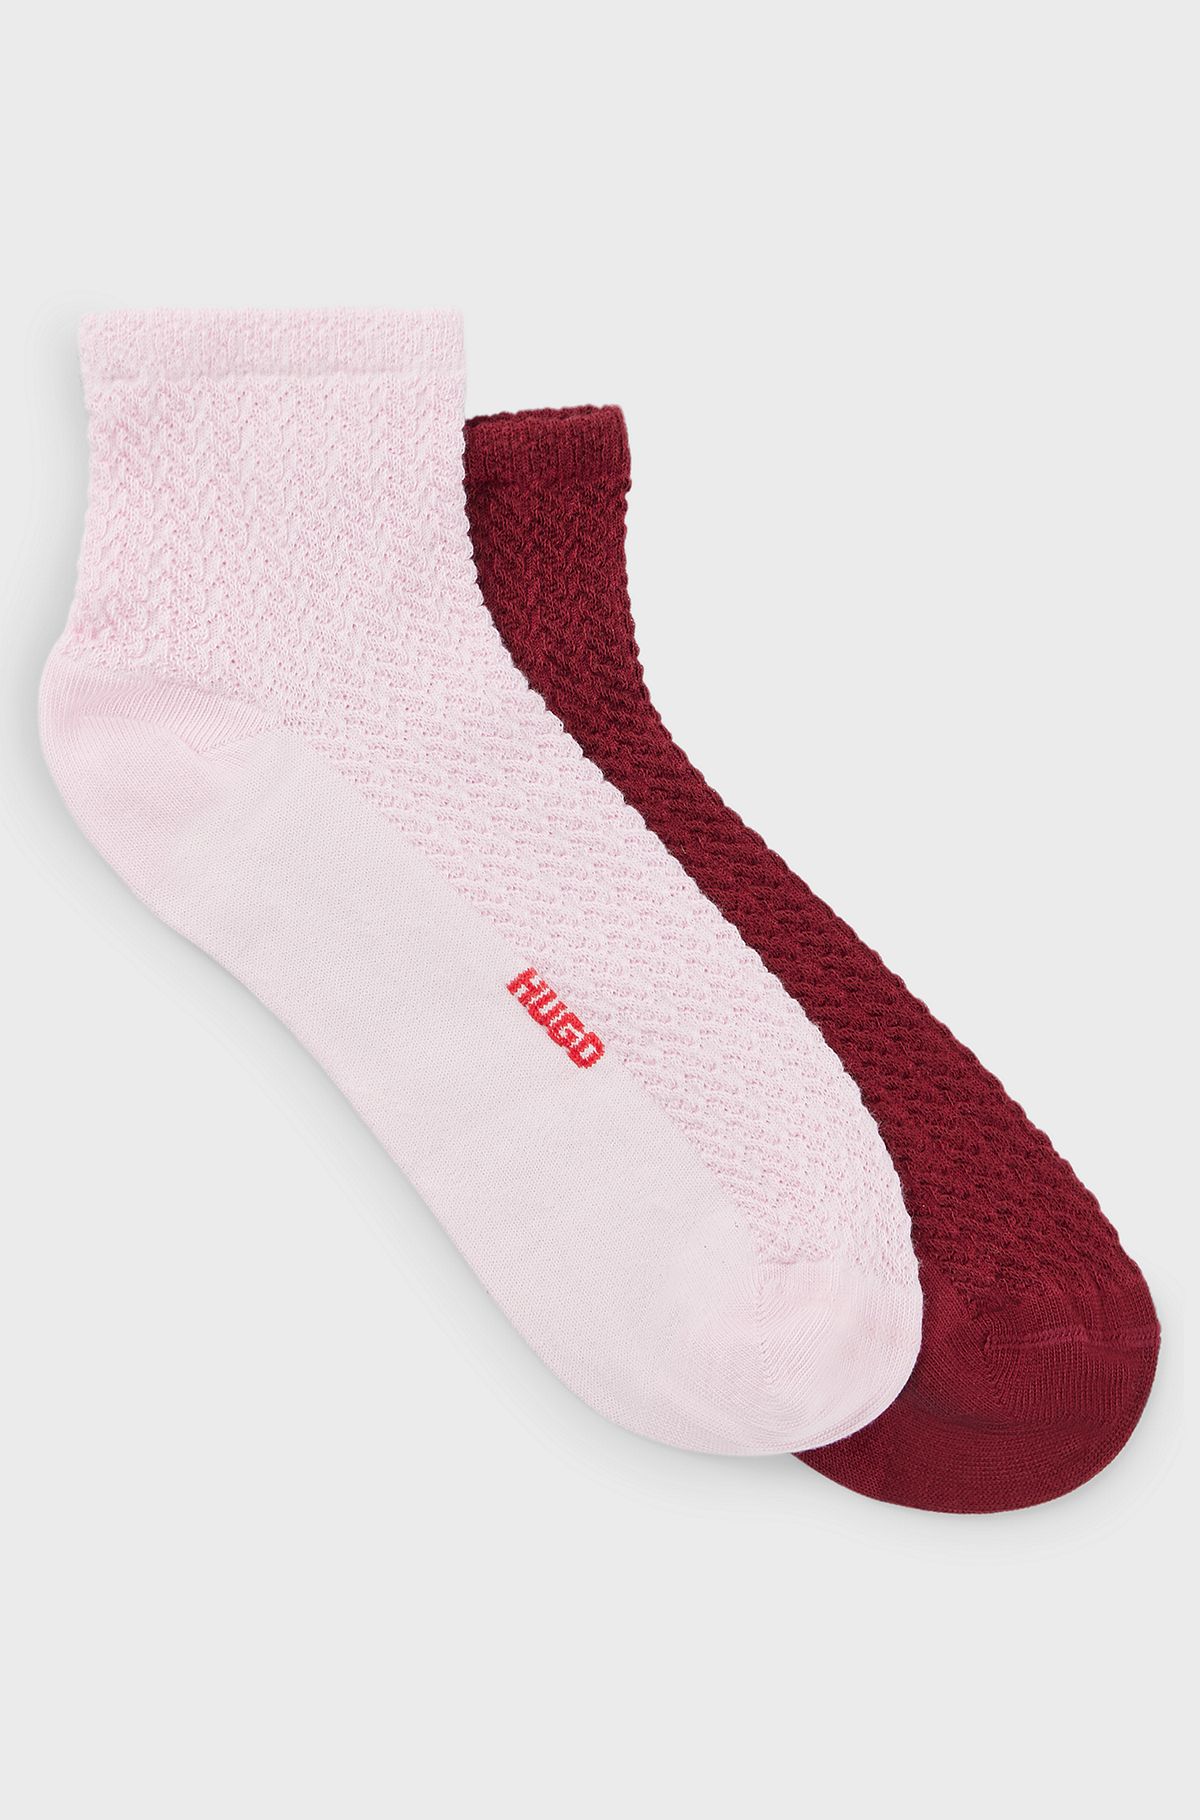 Two-pack of quarter-length socks with logo details, light pink